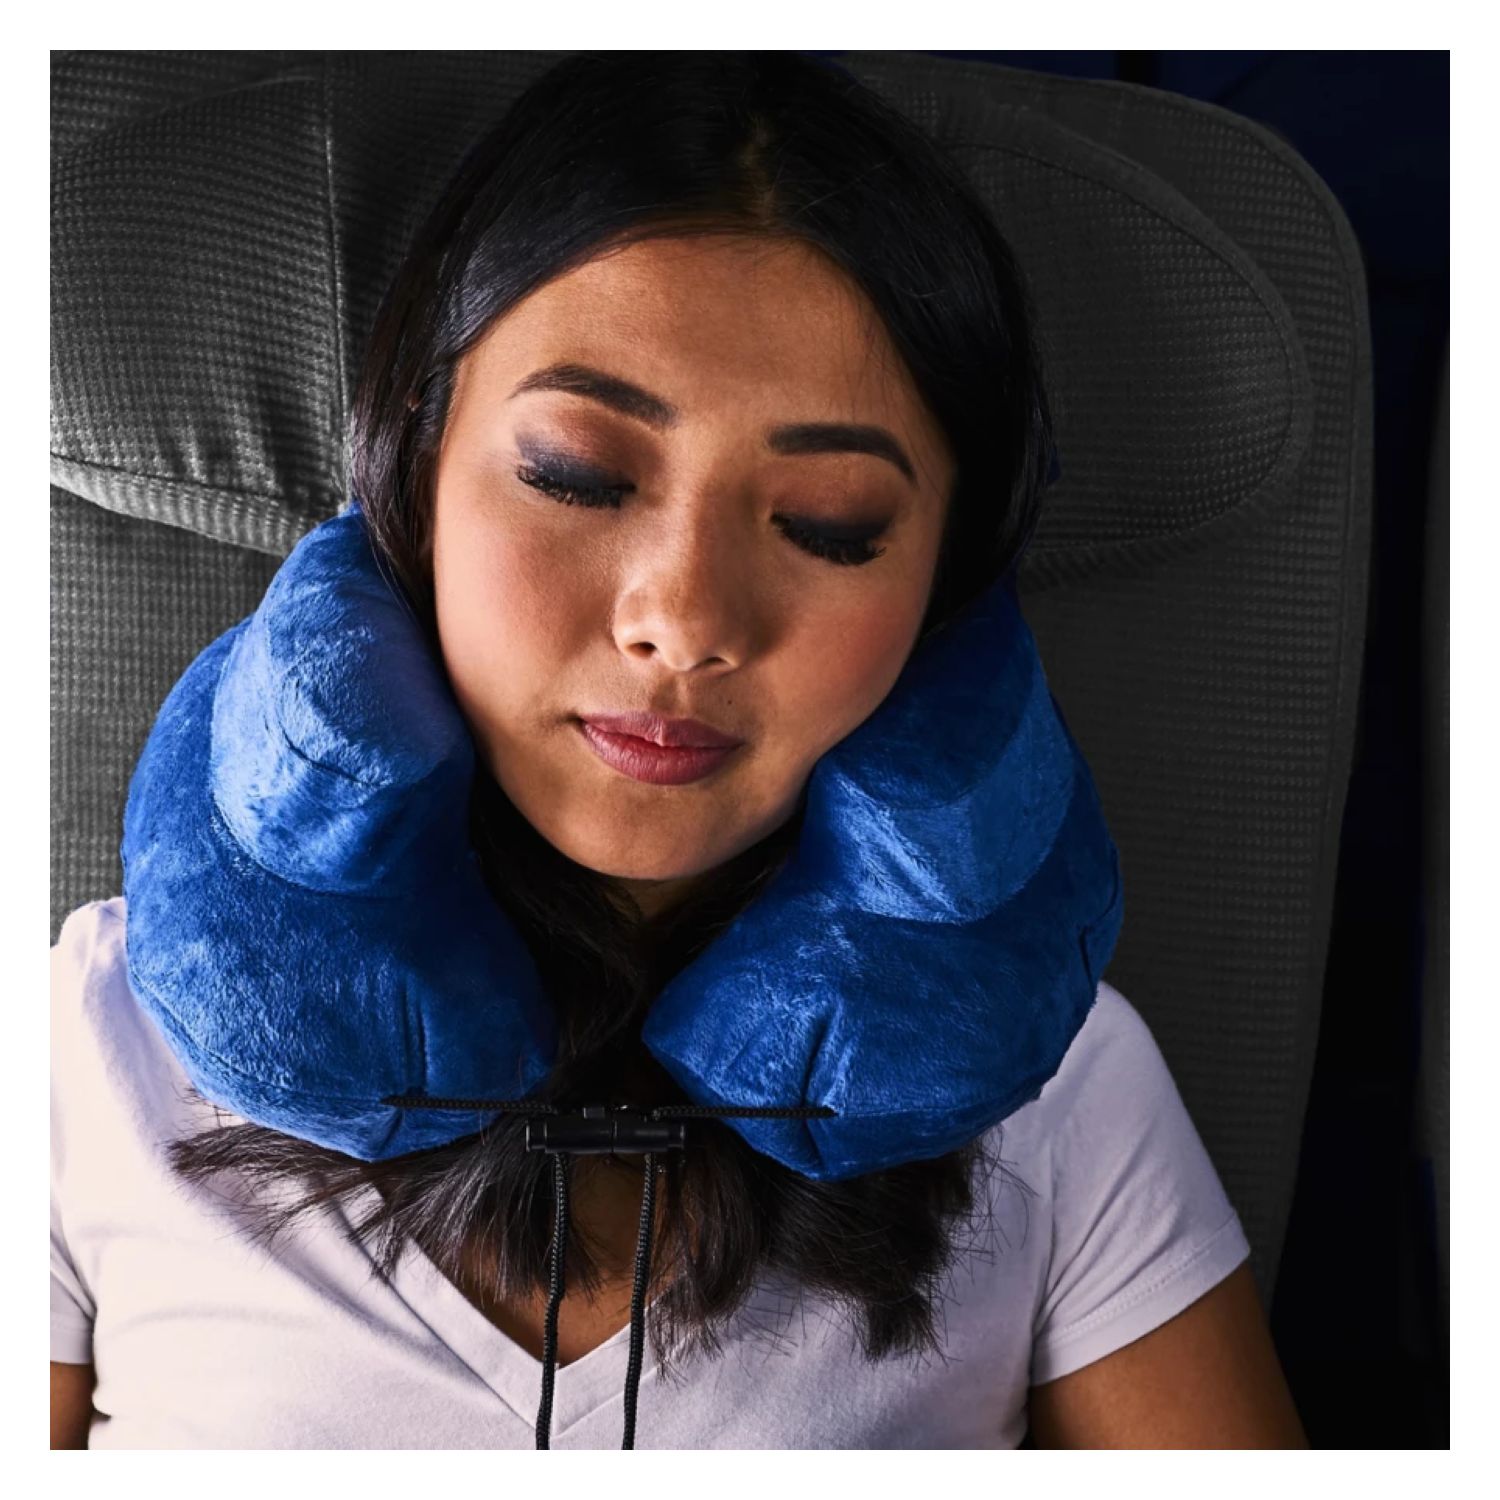 cabeau air evolution inflatable travel pillow